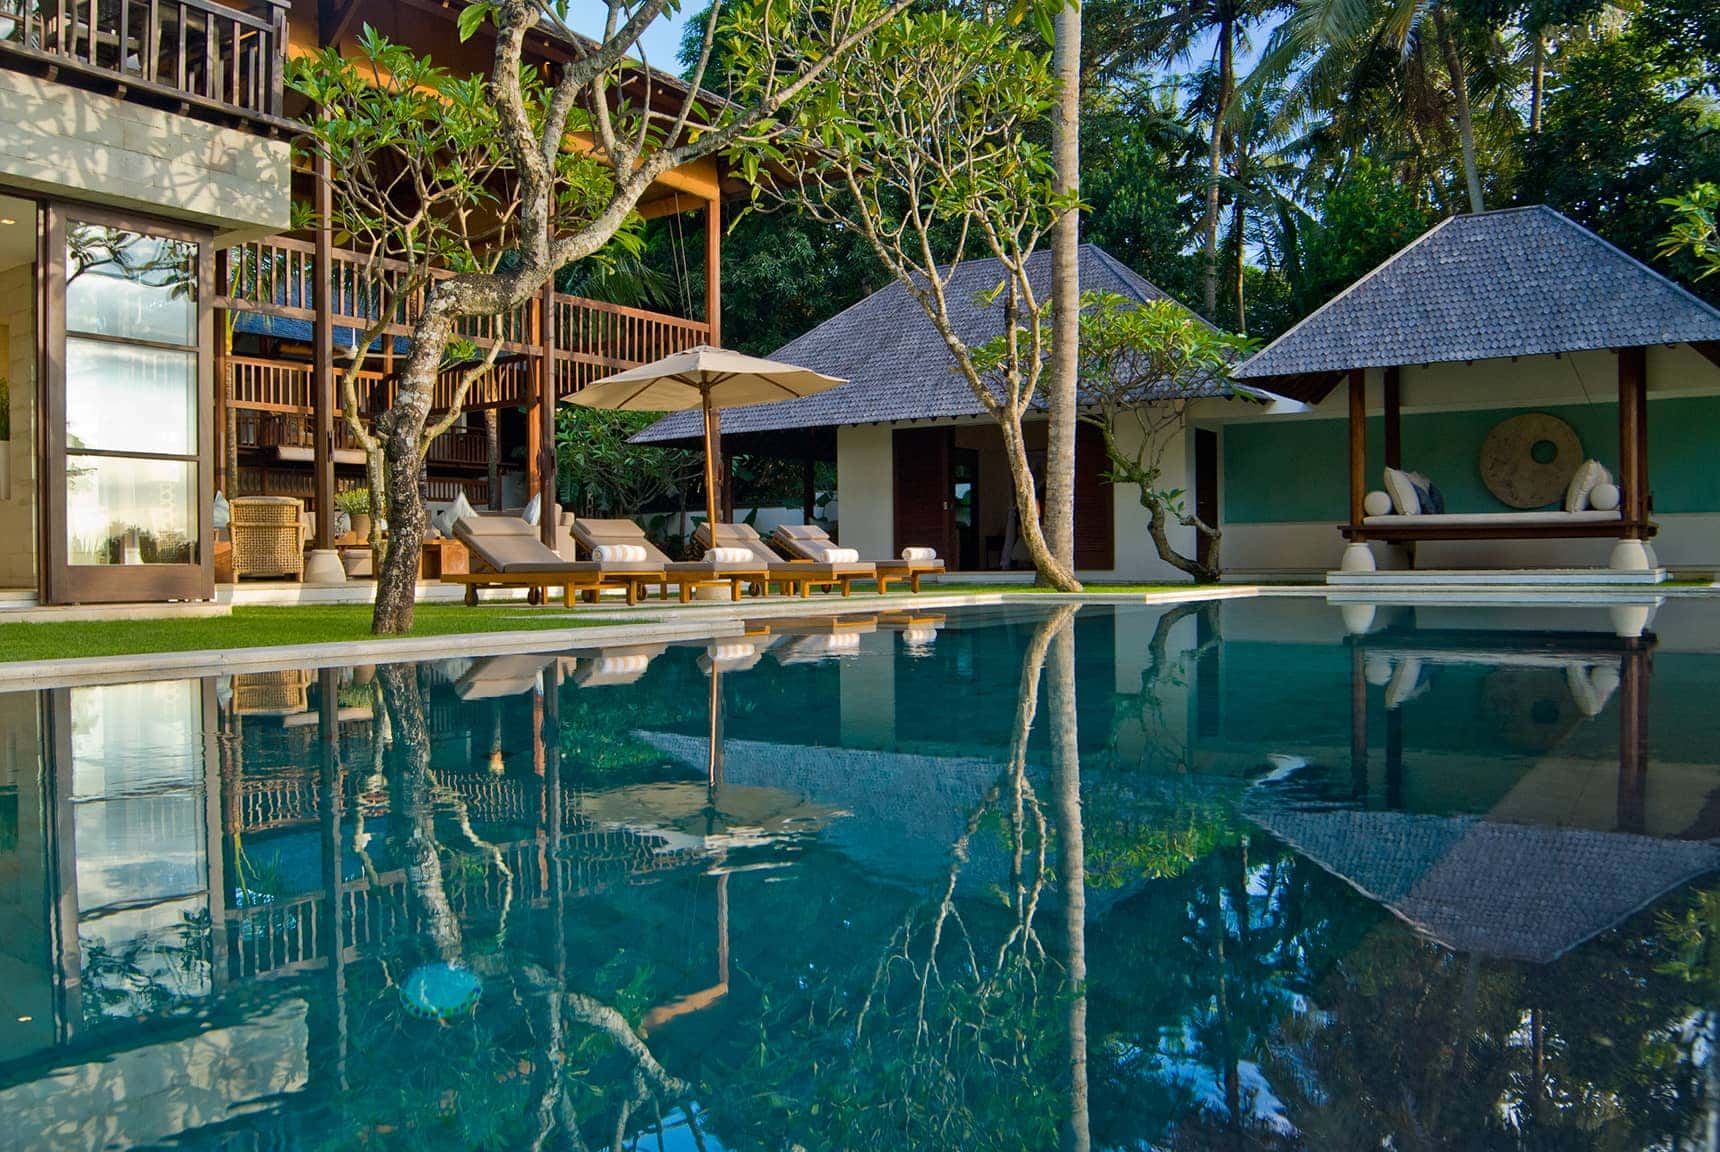 Villa Kemah Tinggi - Canggu, Bali Indonesia (Bali villa photography by master photographer Rick Carmichael of LuxViz)